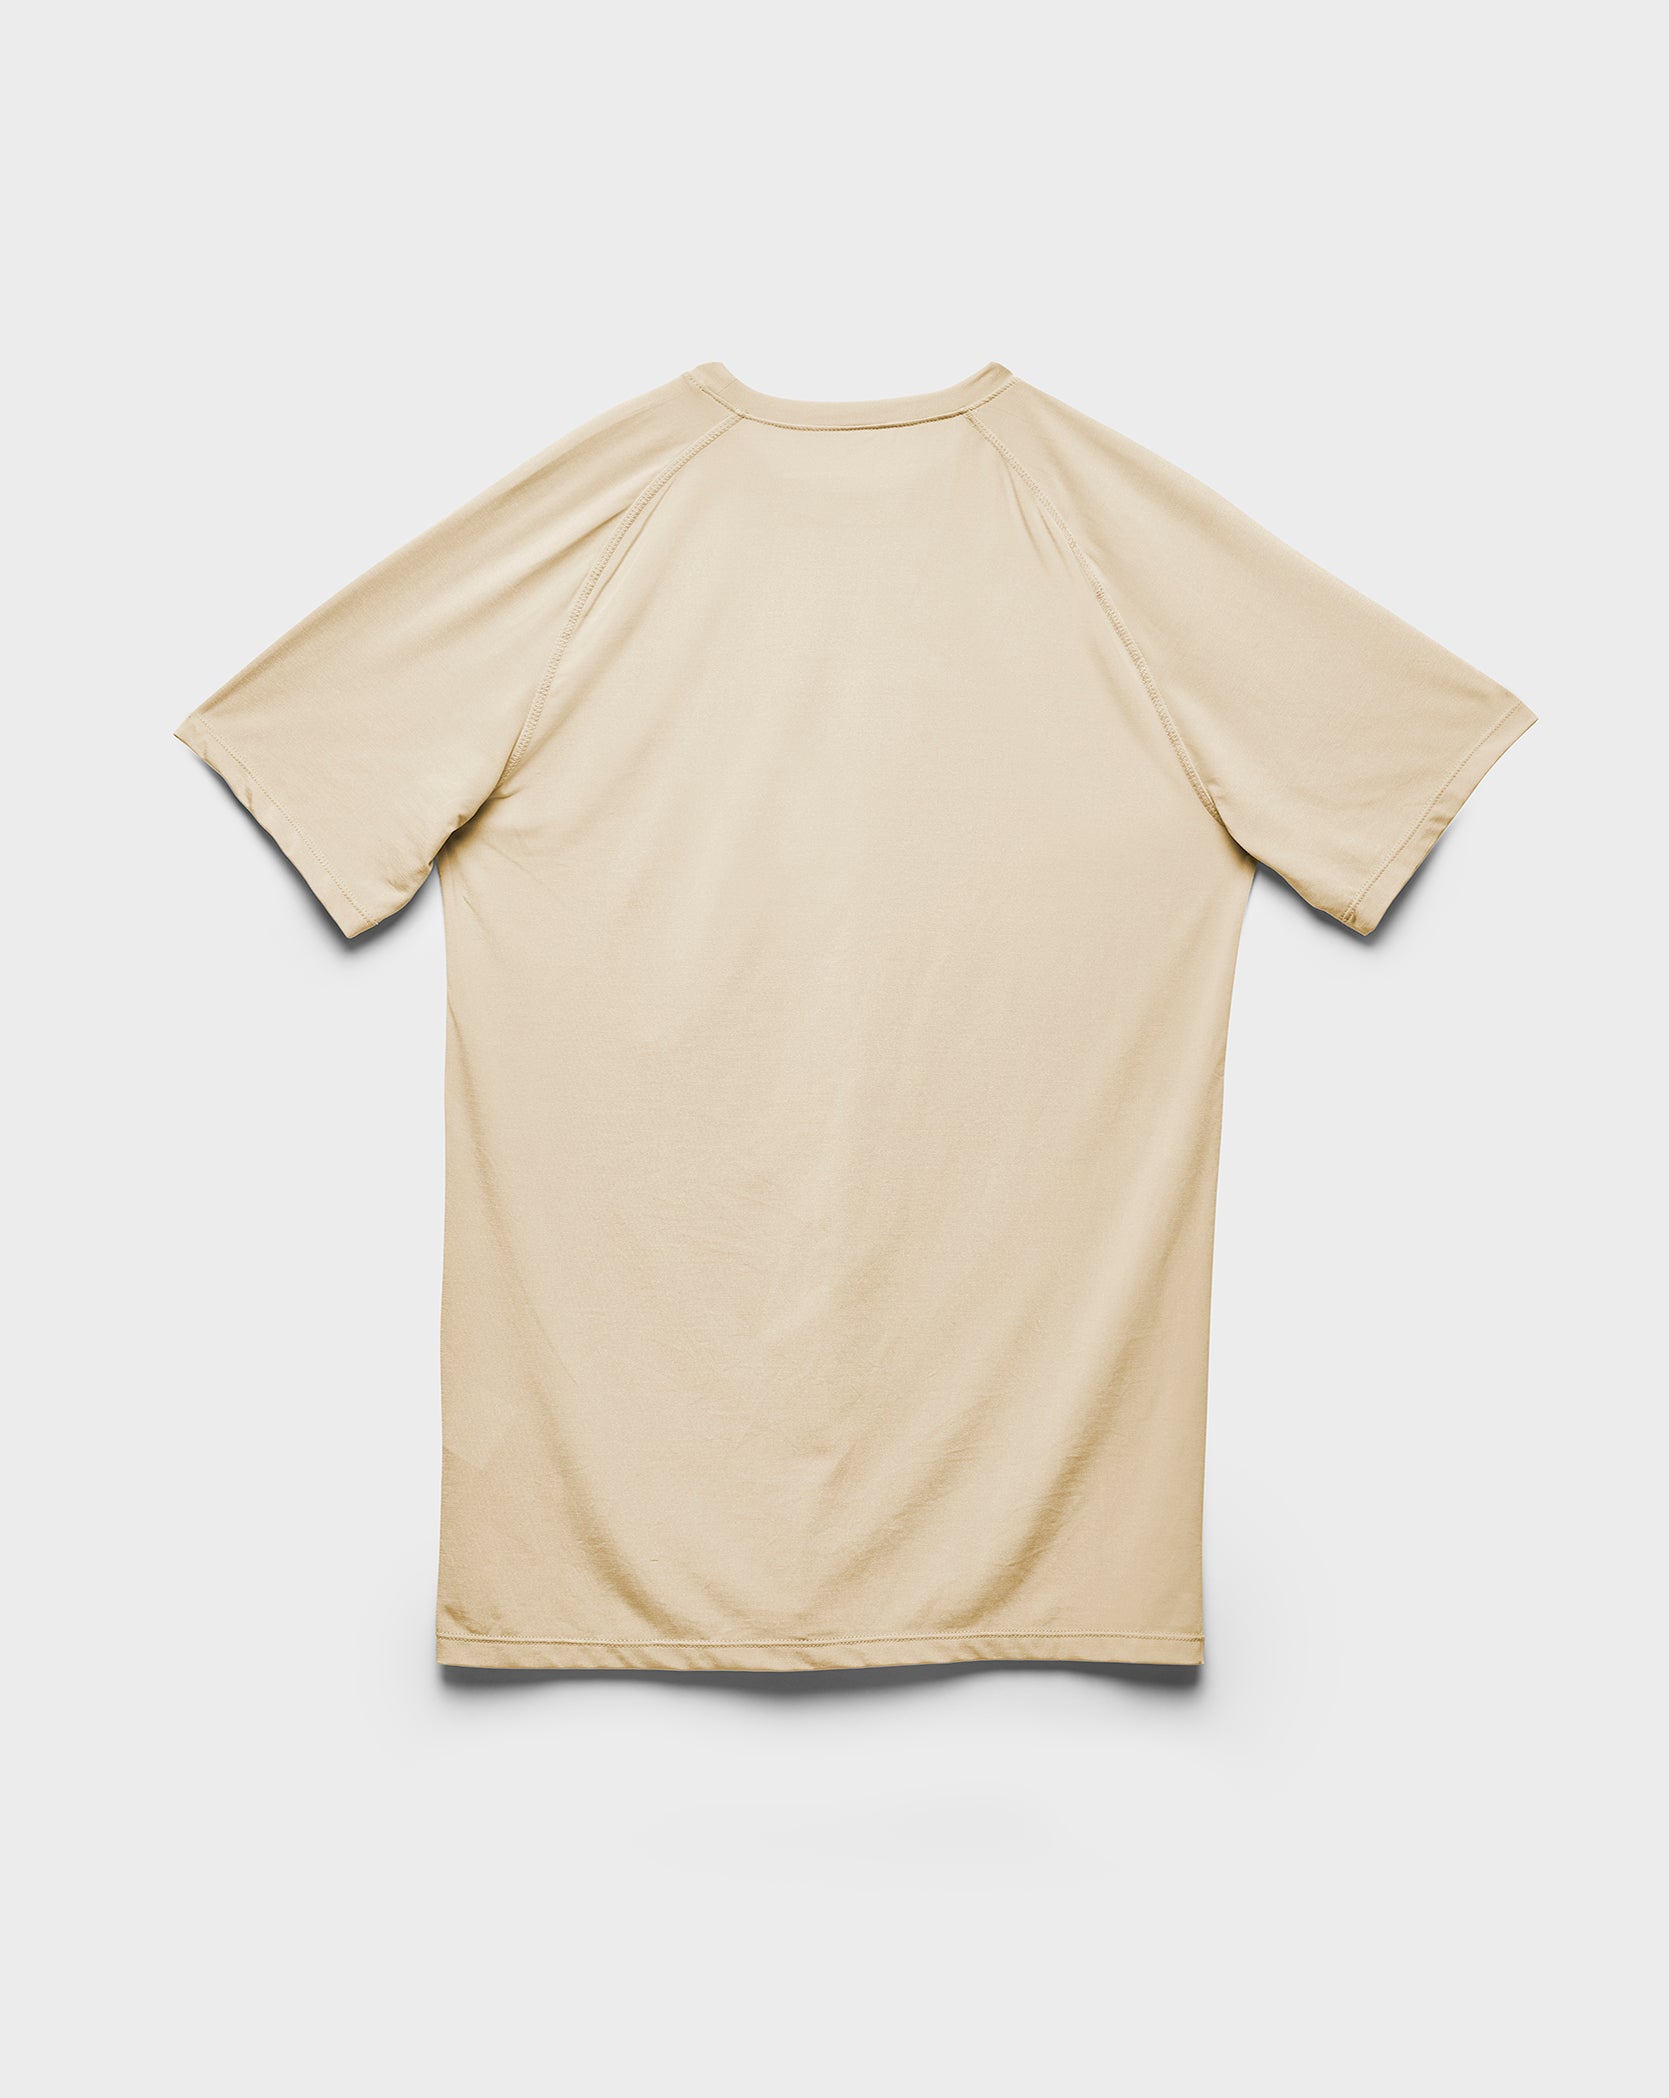 Twinzz active beige t-shirt back